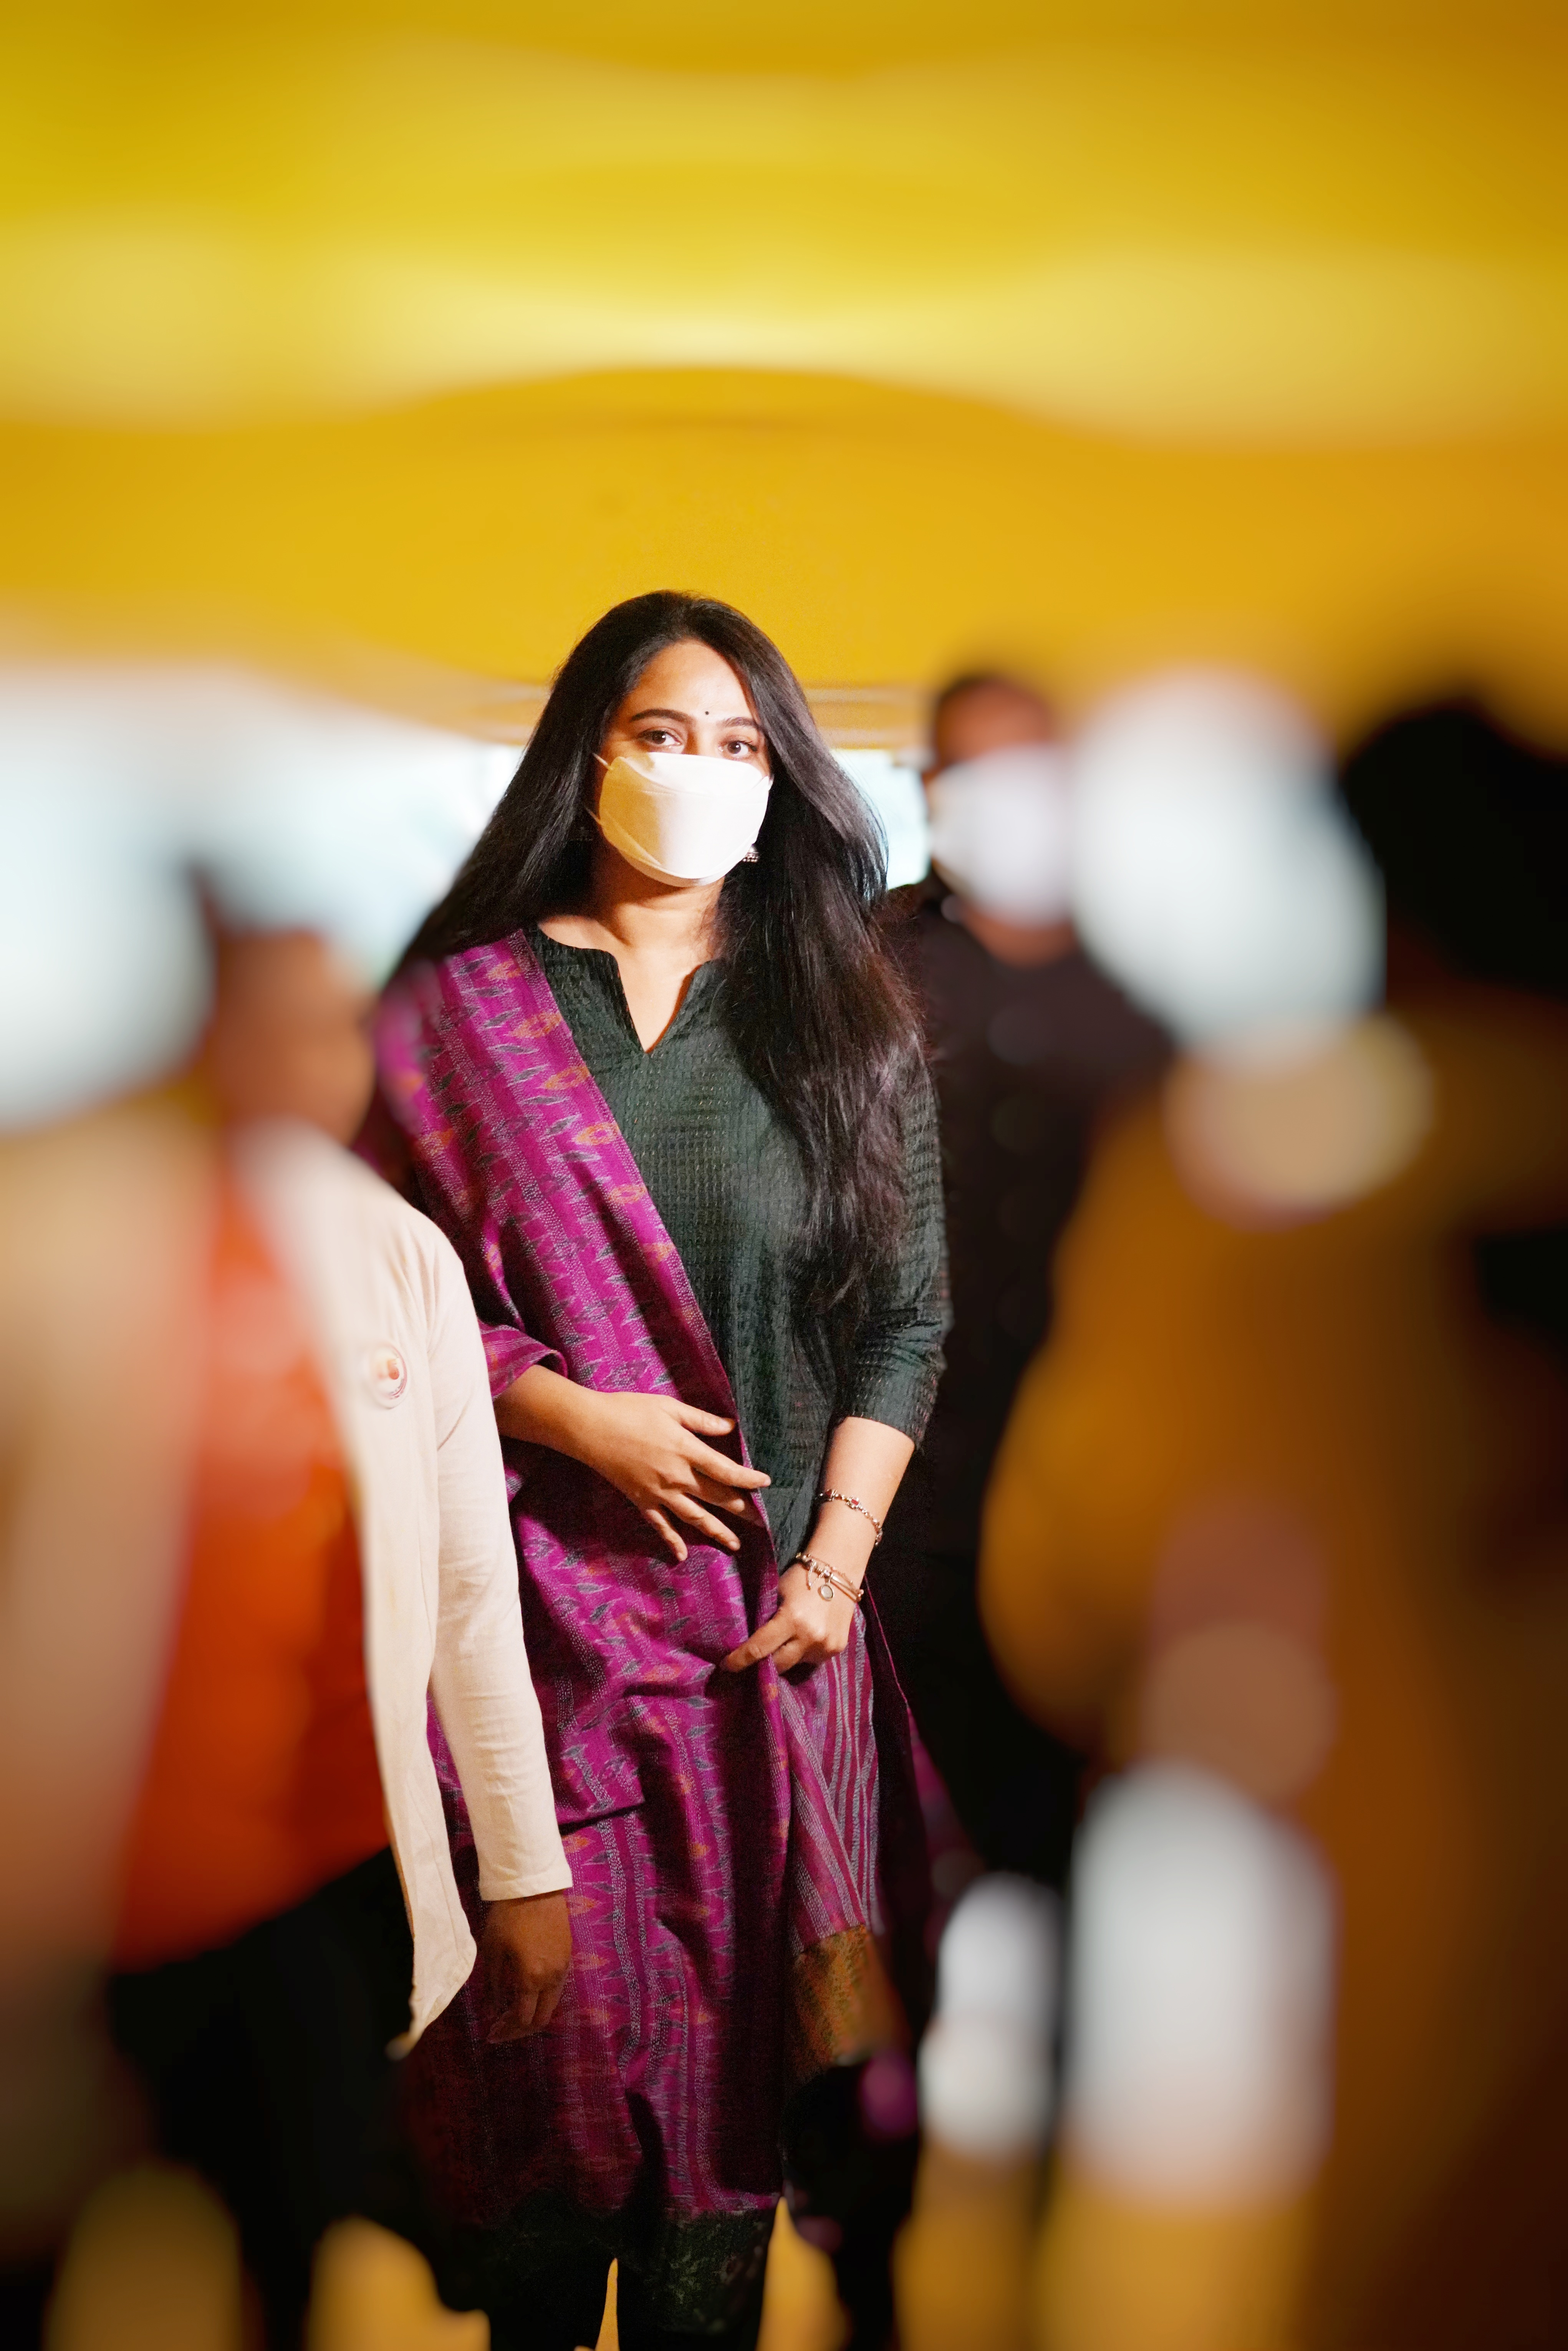 Top Indian Fashion Styles Of Anushka Shetty | Telugu Filmnagar